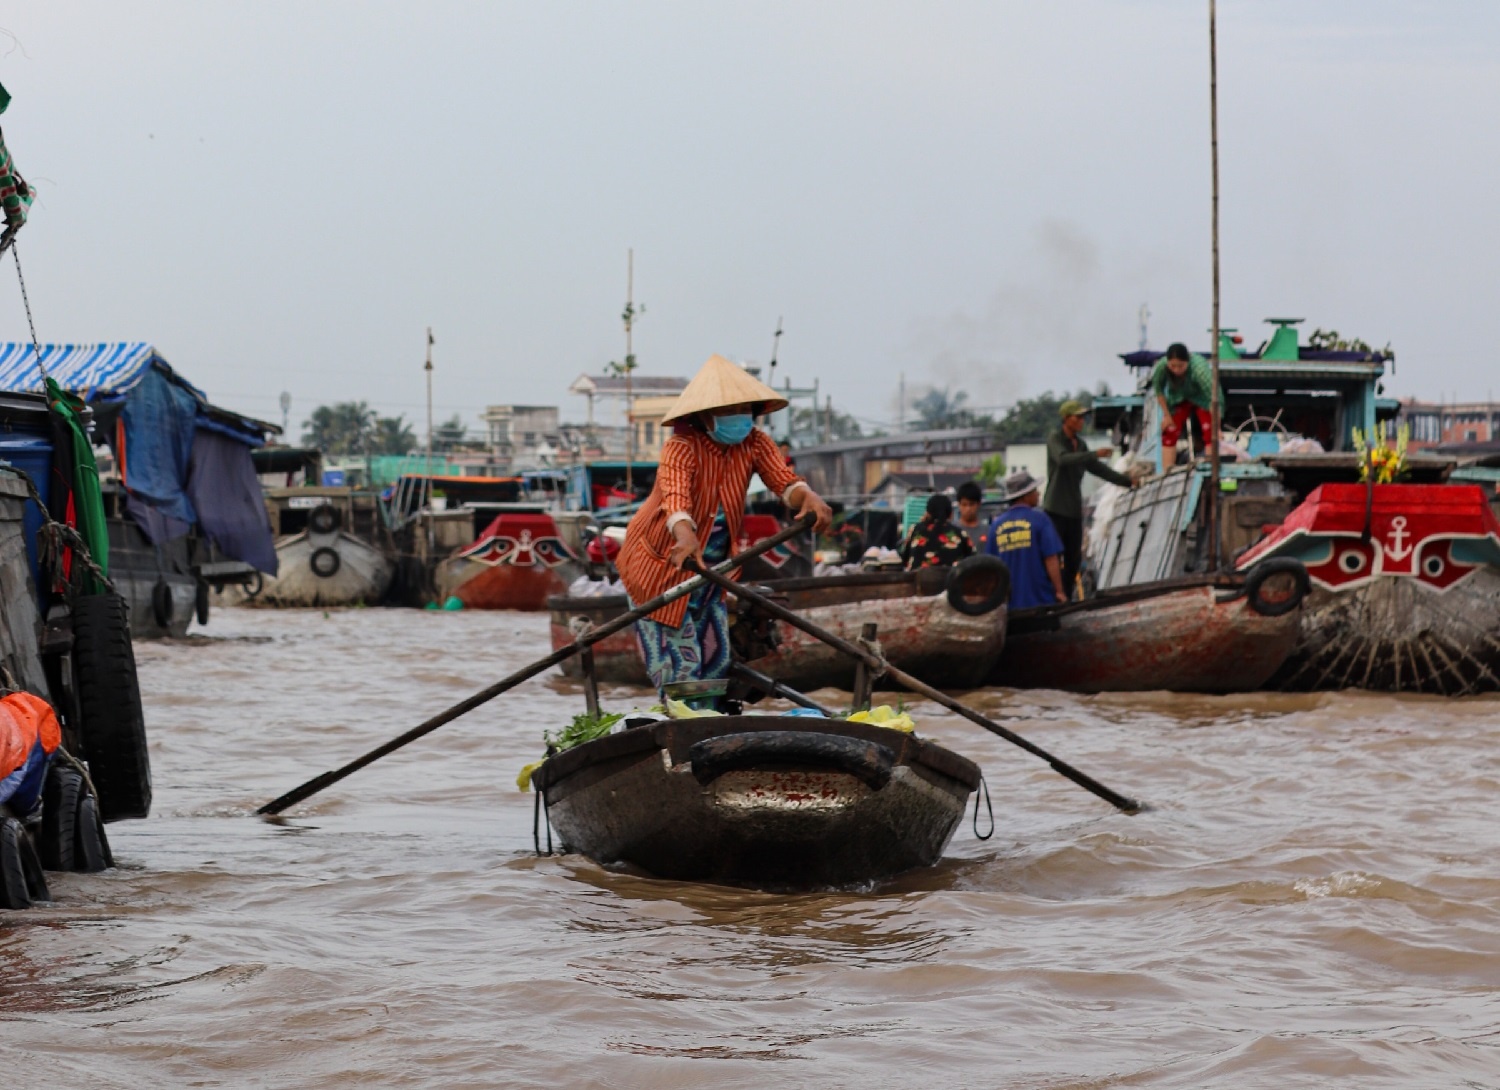 Mekong Delta Cruise 1 Night Itinerary Suggestions